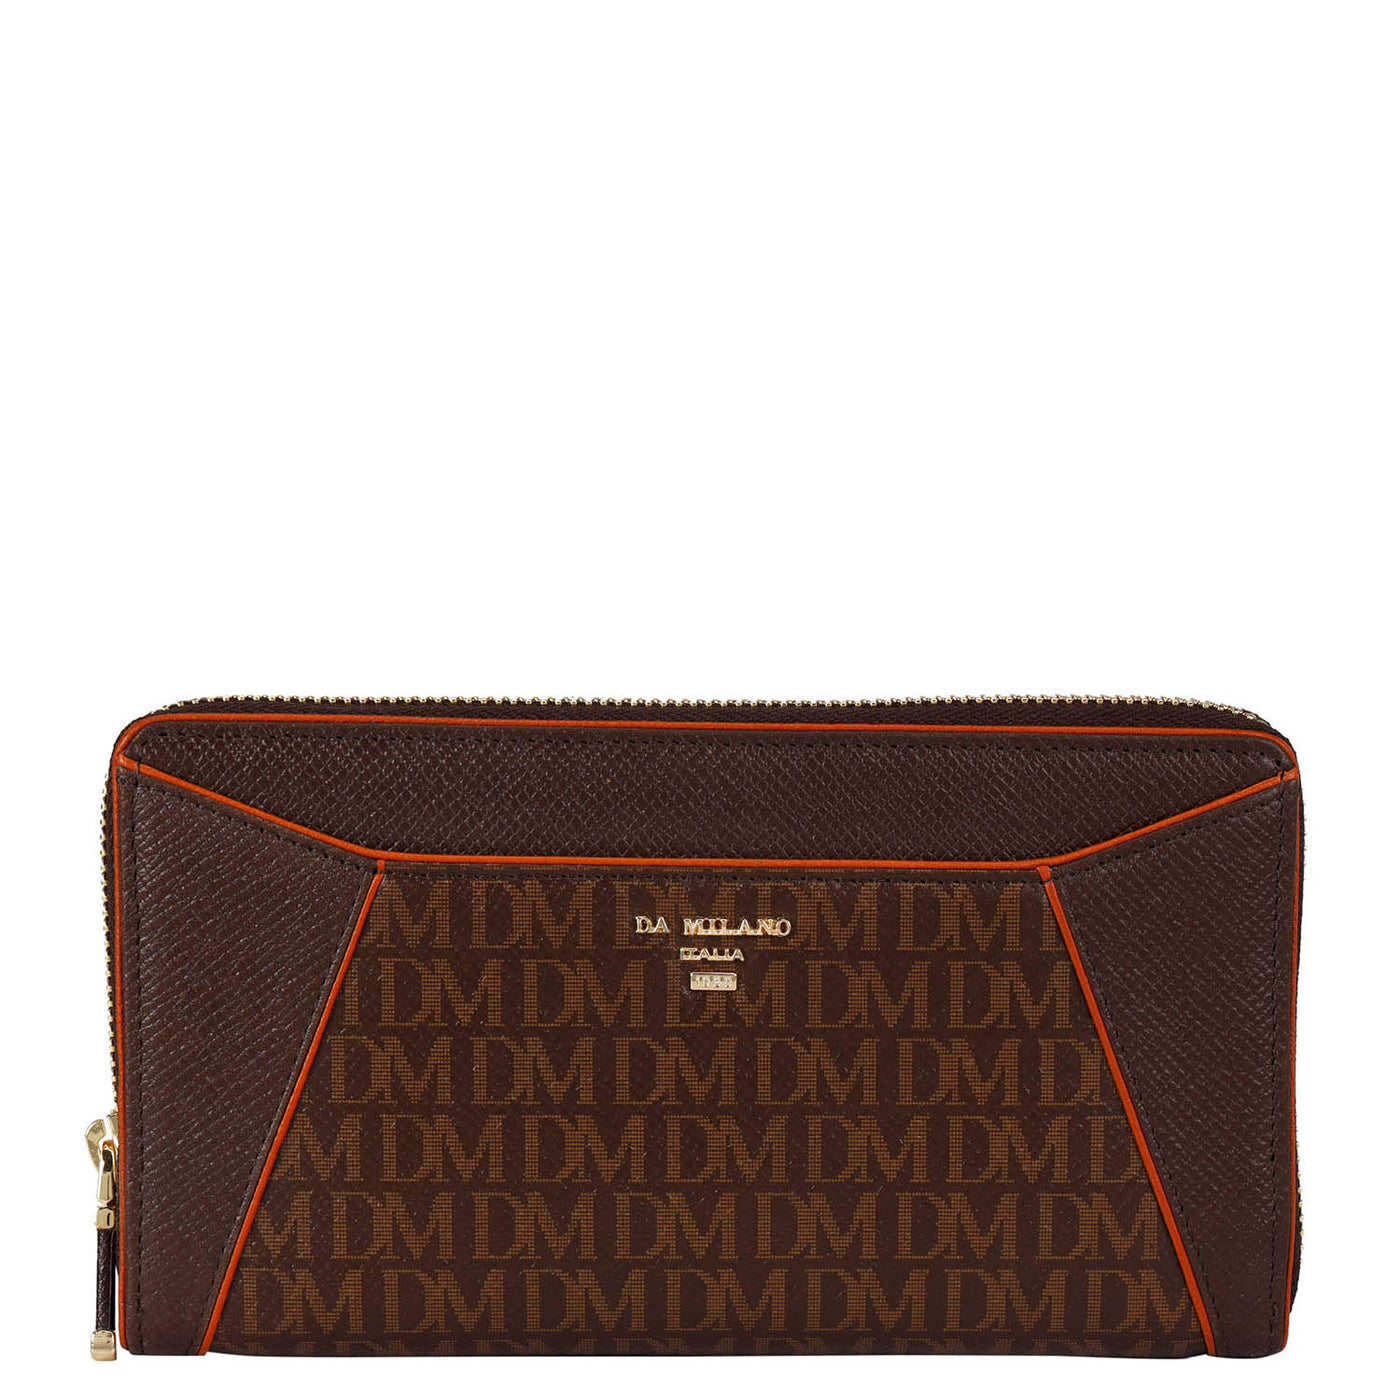 Monogram Franzy Leather Ladies Wallet - Oak